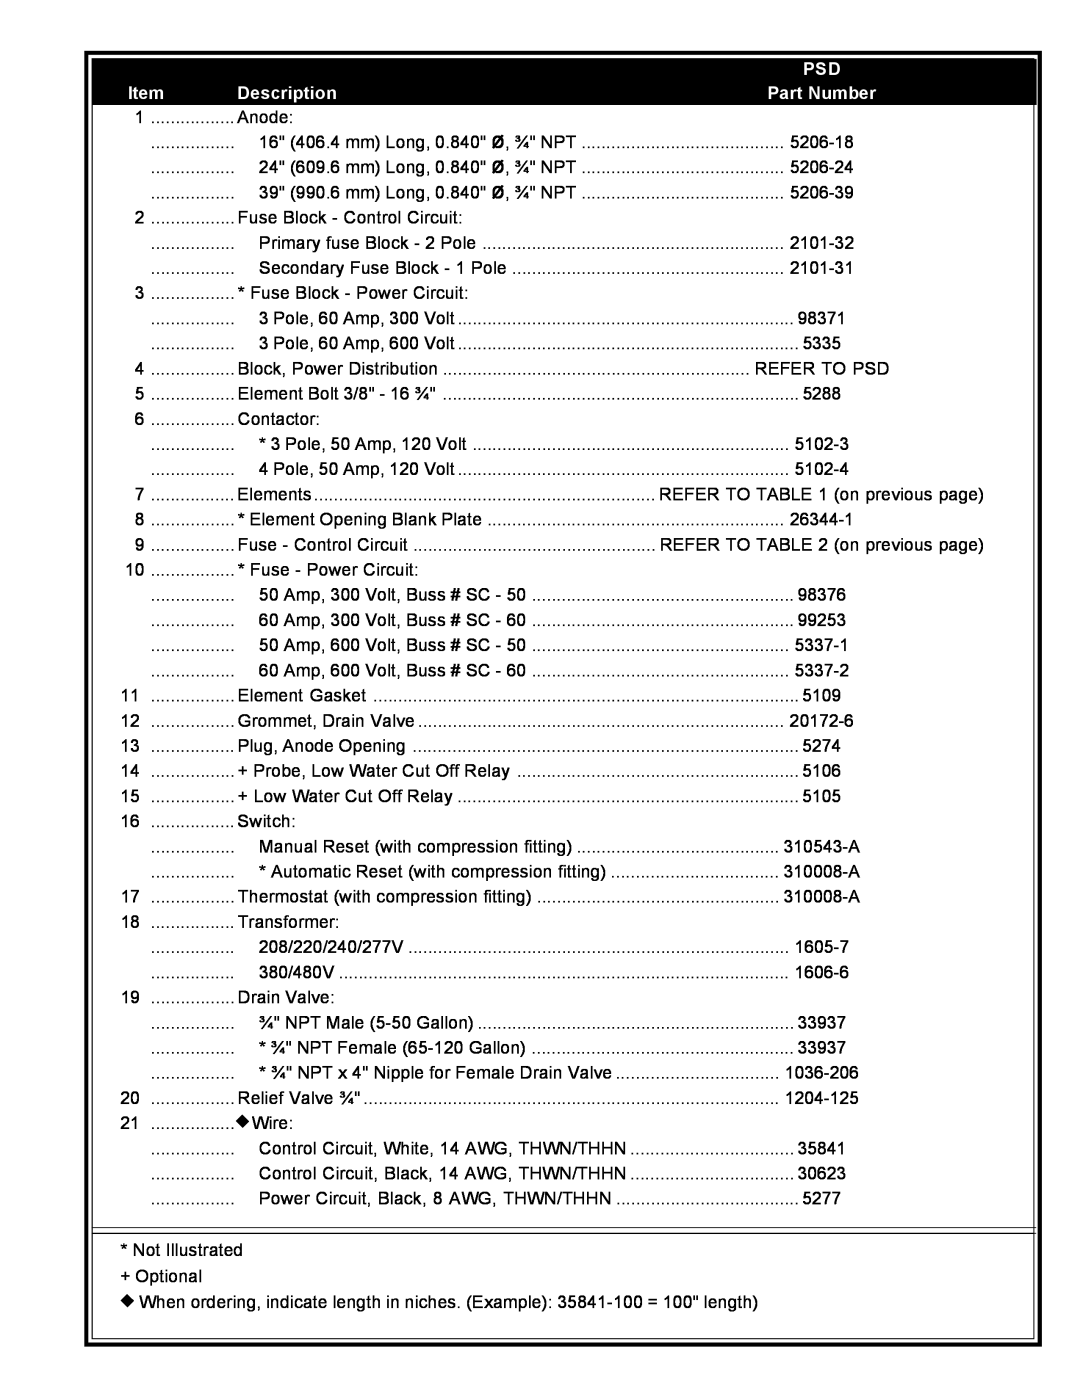 State Industries 5 THRU 120 manual Description, Part Number, Elements, Fuse - Control Circuit 